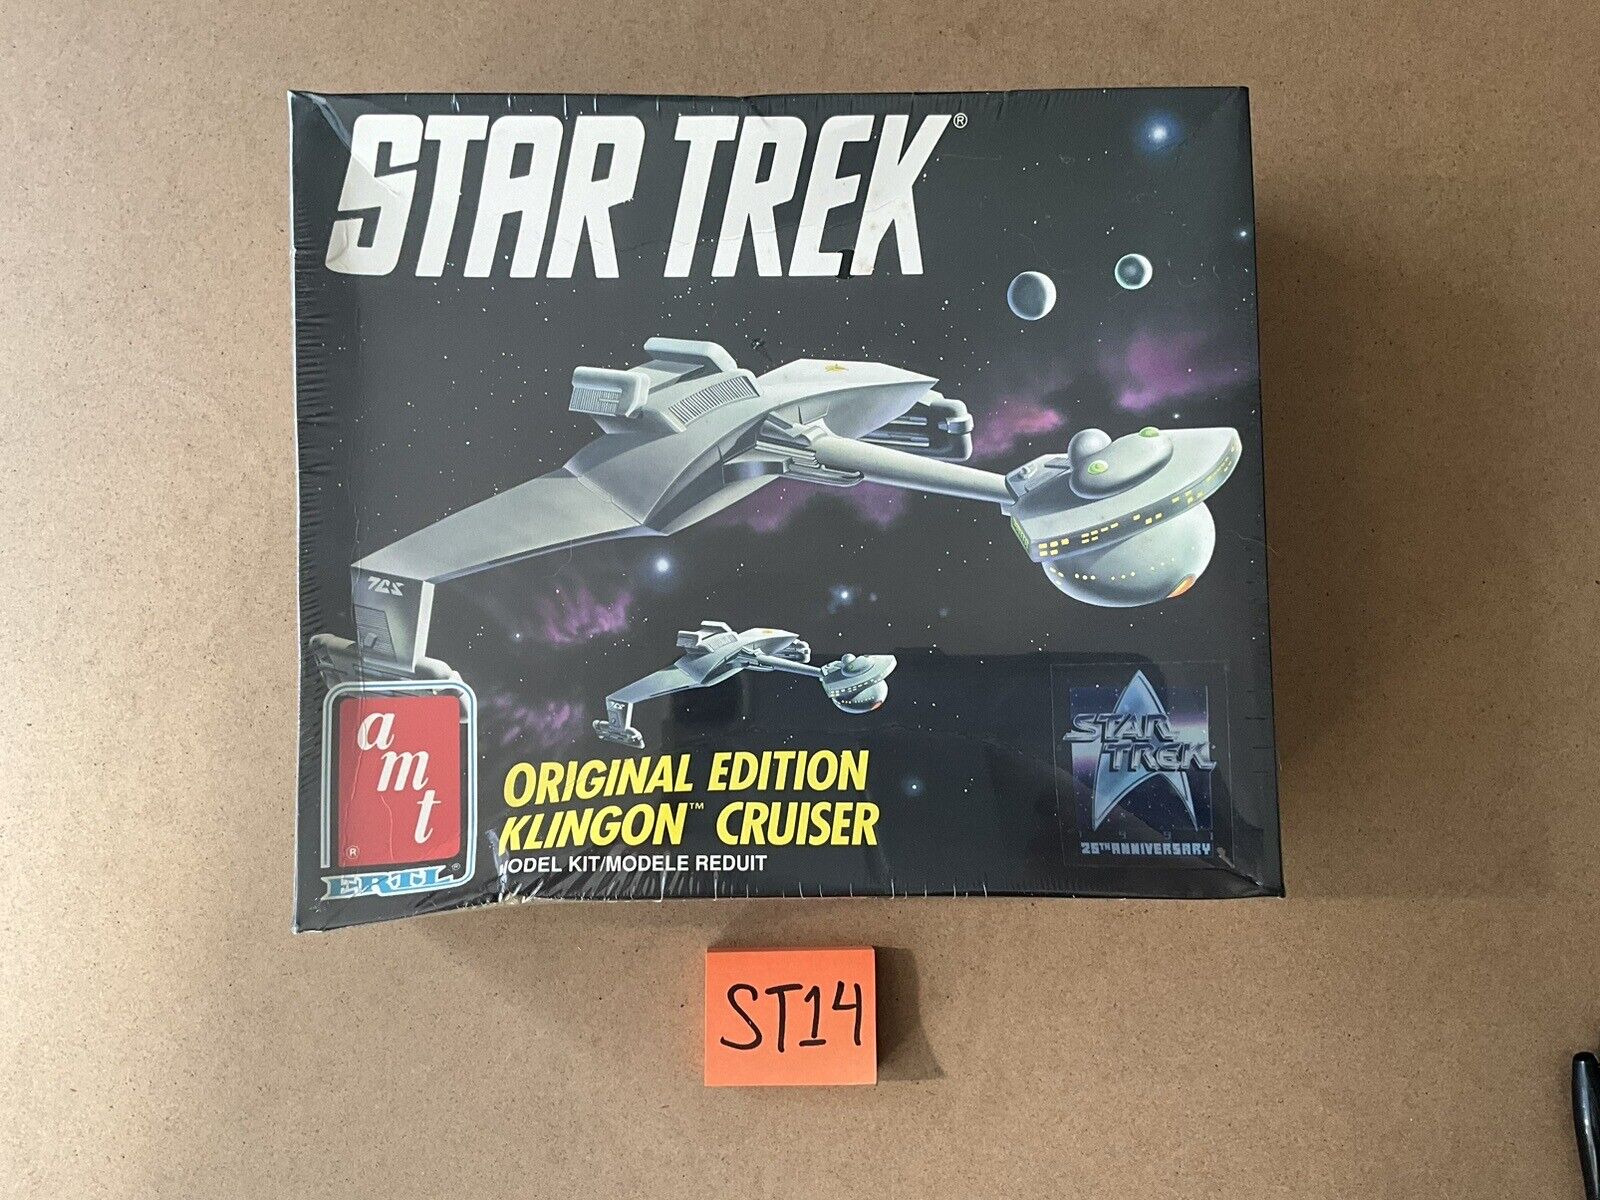 1991 AMT/ERTL Model STAR TREK ORIGINAL EDITION KLINGON CRUISER Kit #6743 Sealed